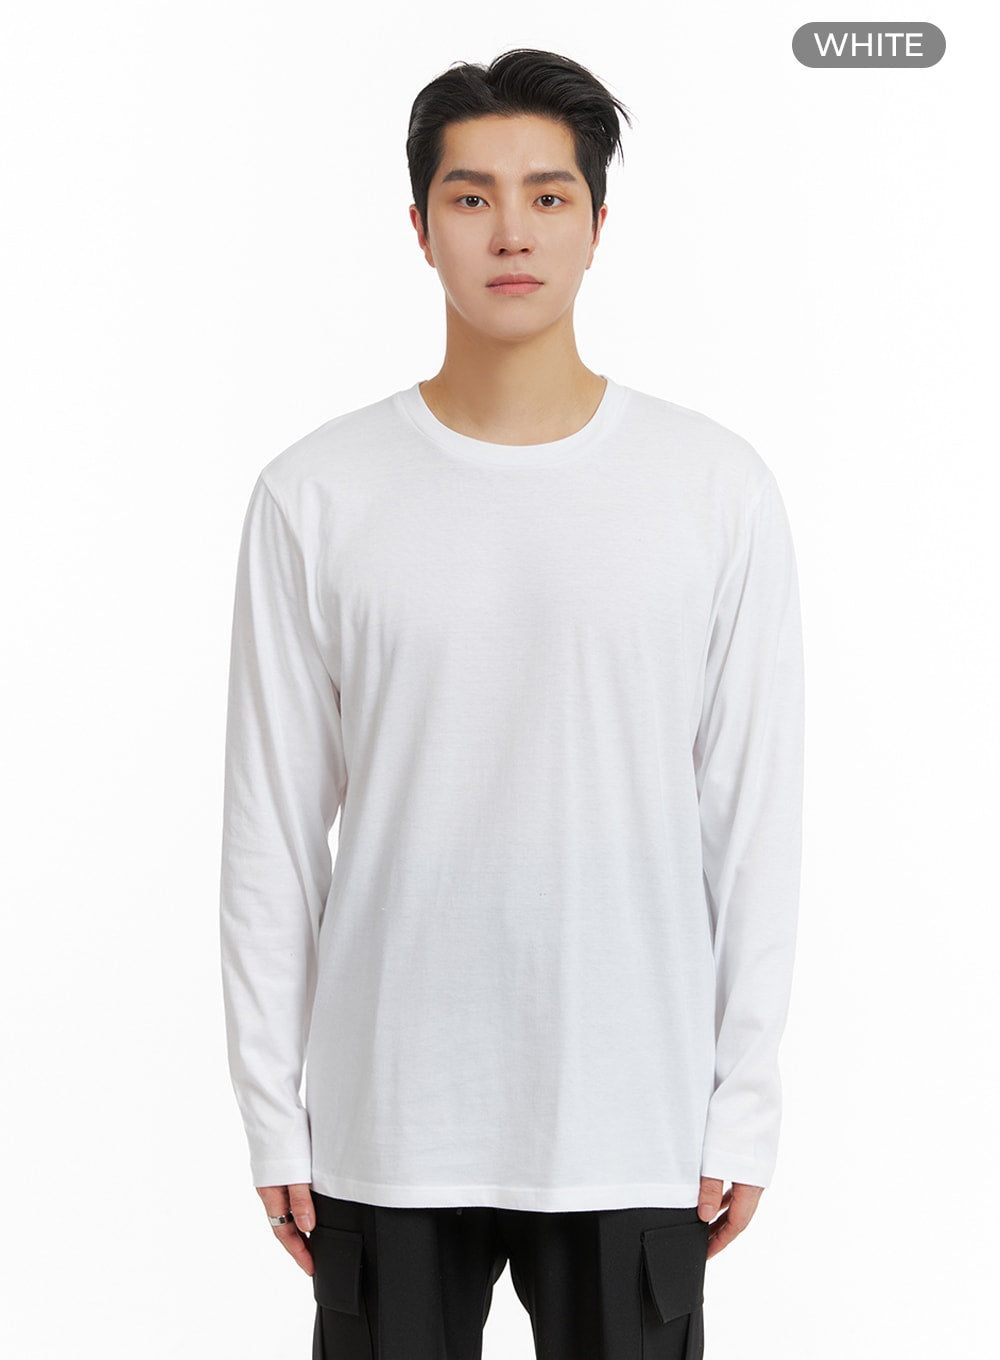 mens-basic-cotton-long-sleeve-t-shirt-ia401